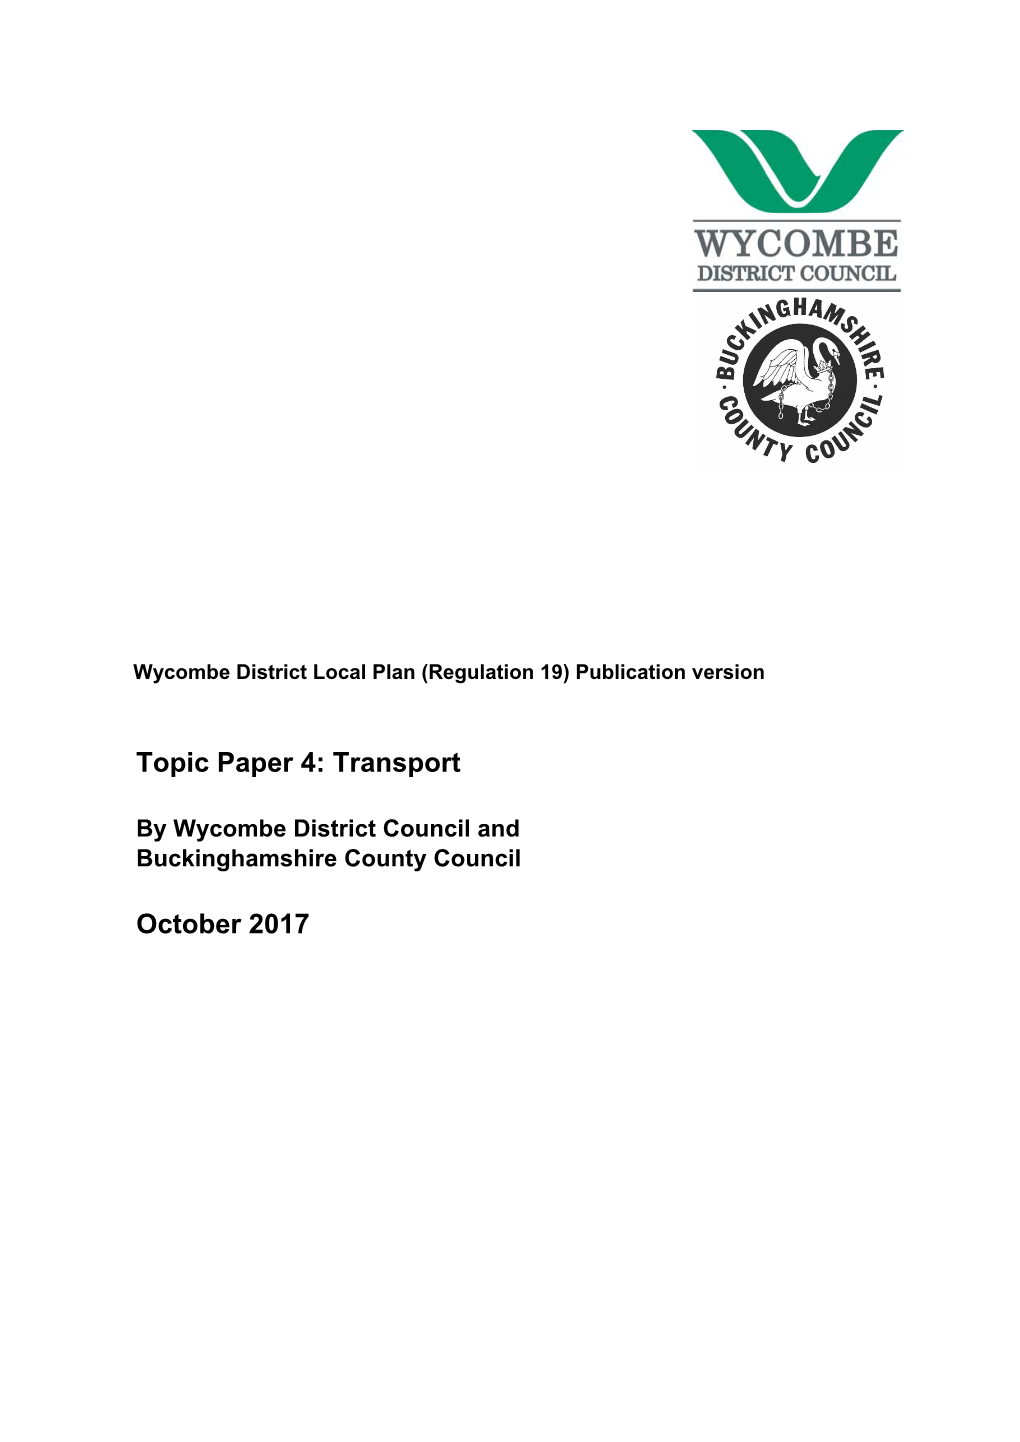 Topic Paper 4: Transport October 2017